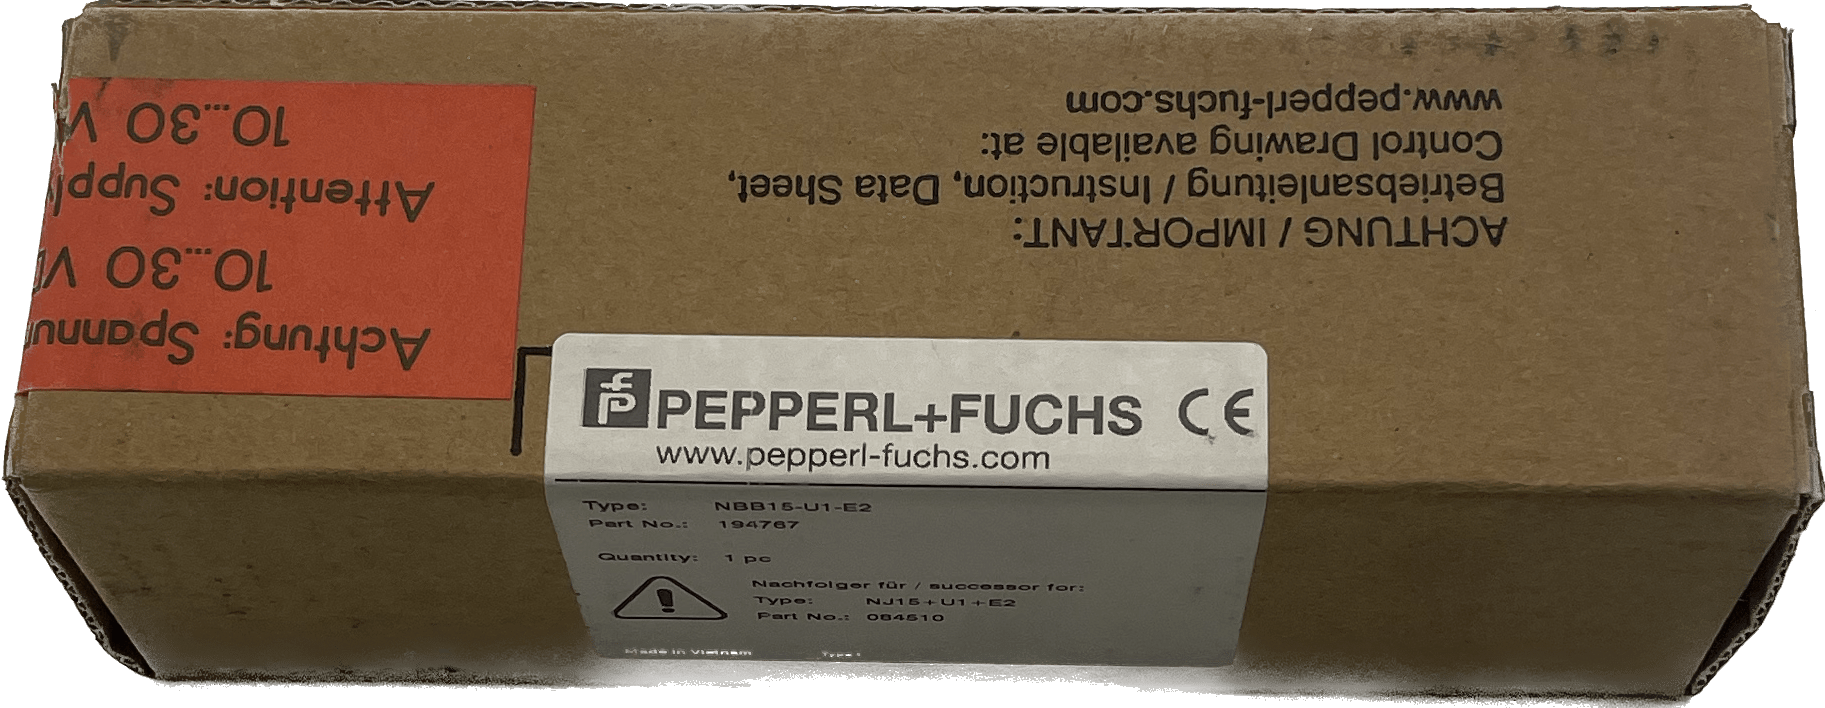 Pepperl+Fuchs NBB15-U1-E2 - #product_category# | Klenk Maschinenhandel